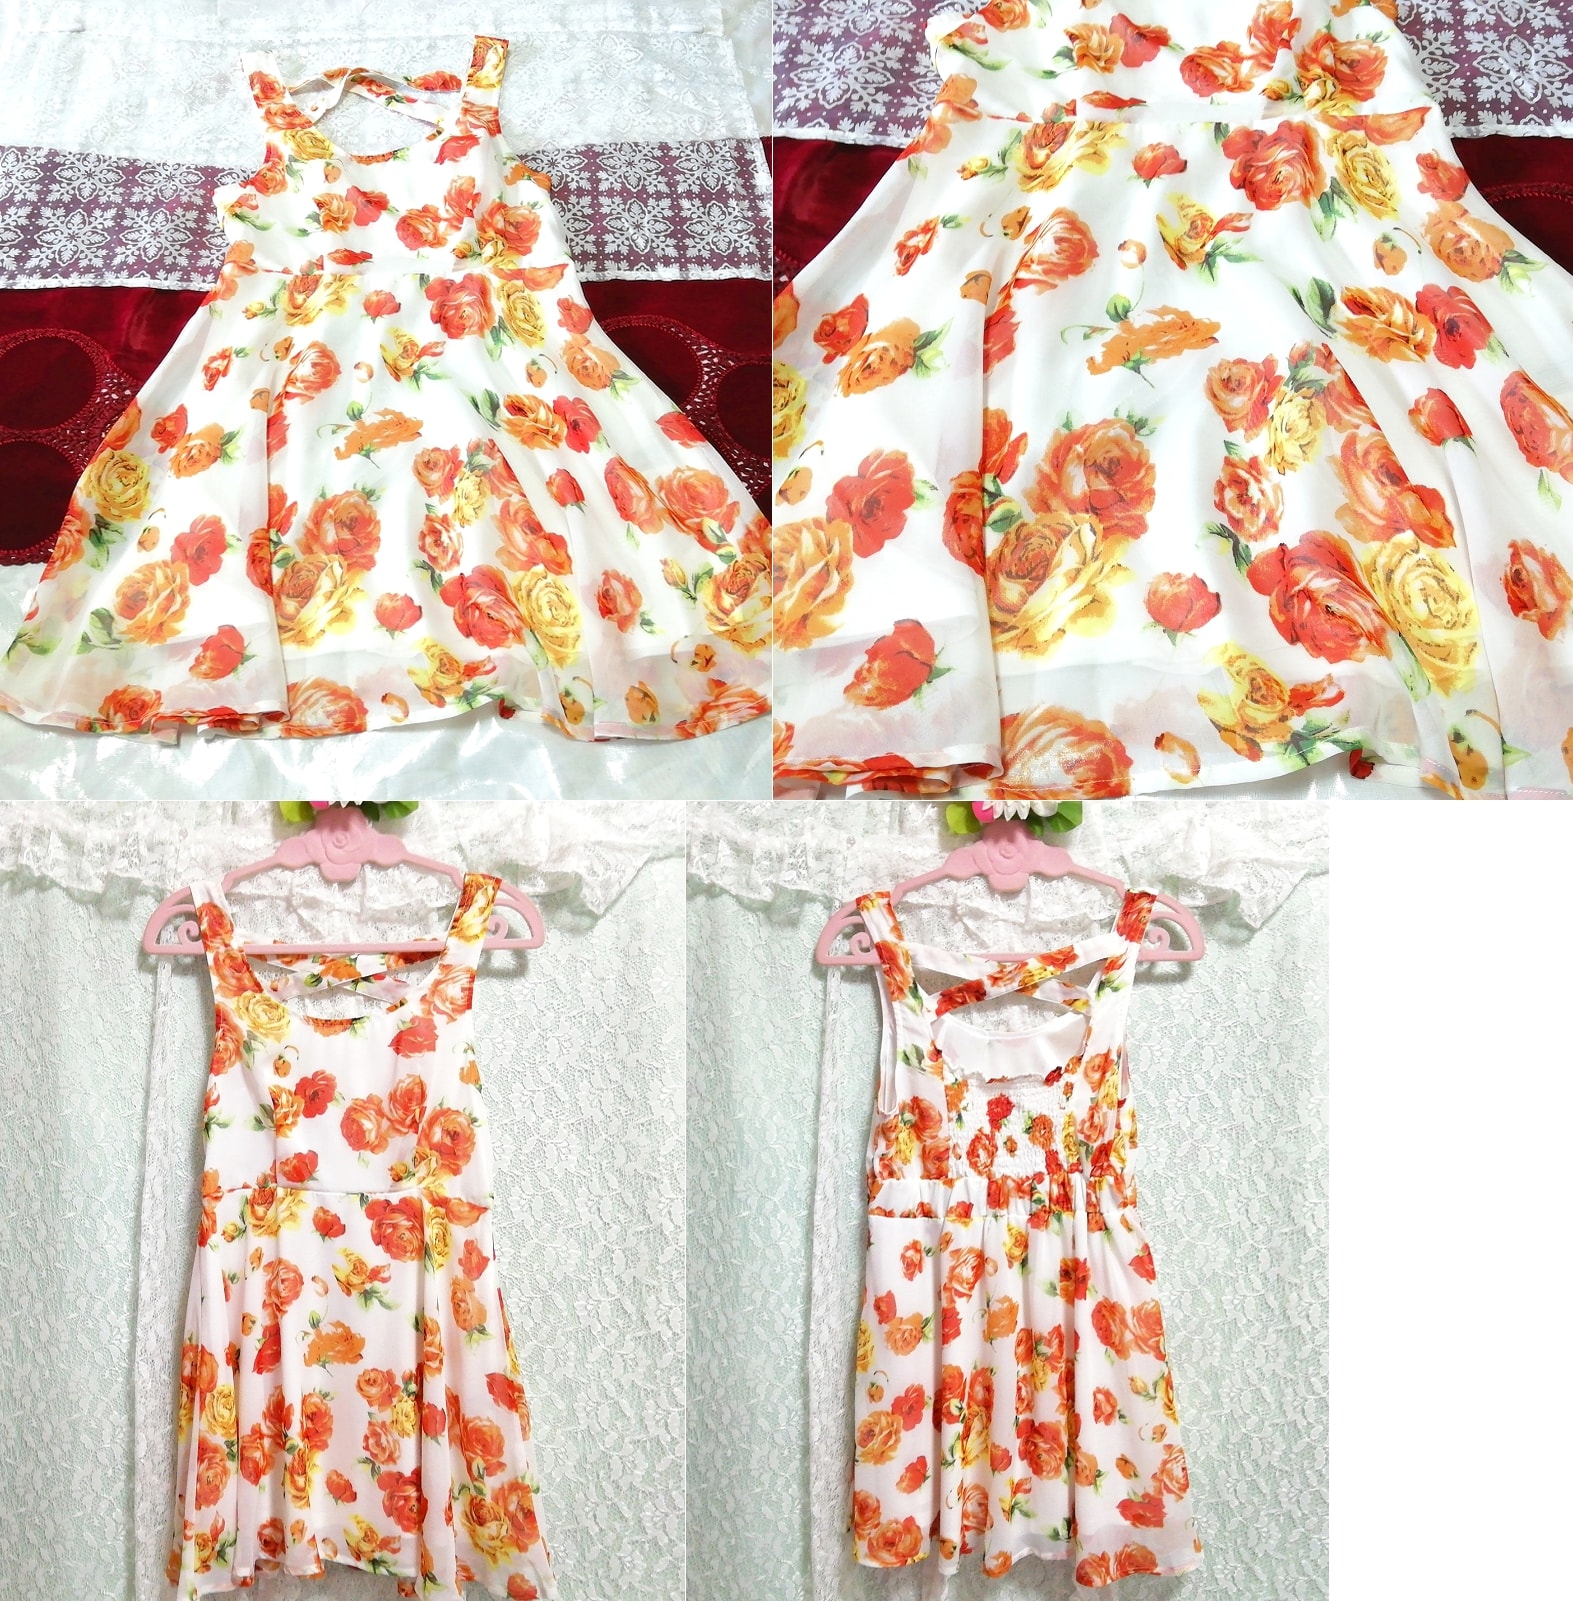 White red orange floral pattern chiffon sleeveless negligee nightgown mini dress, mini skirt, m size